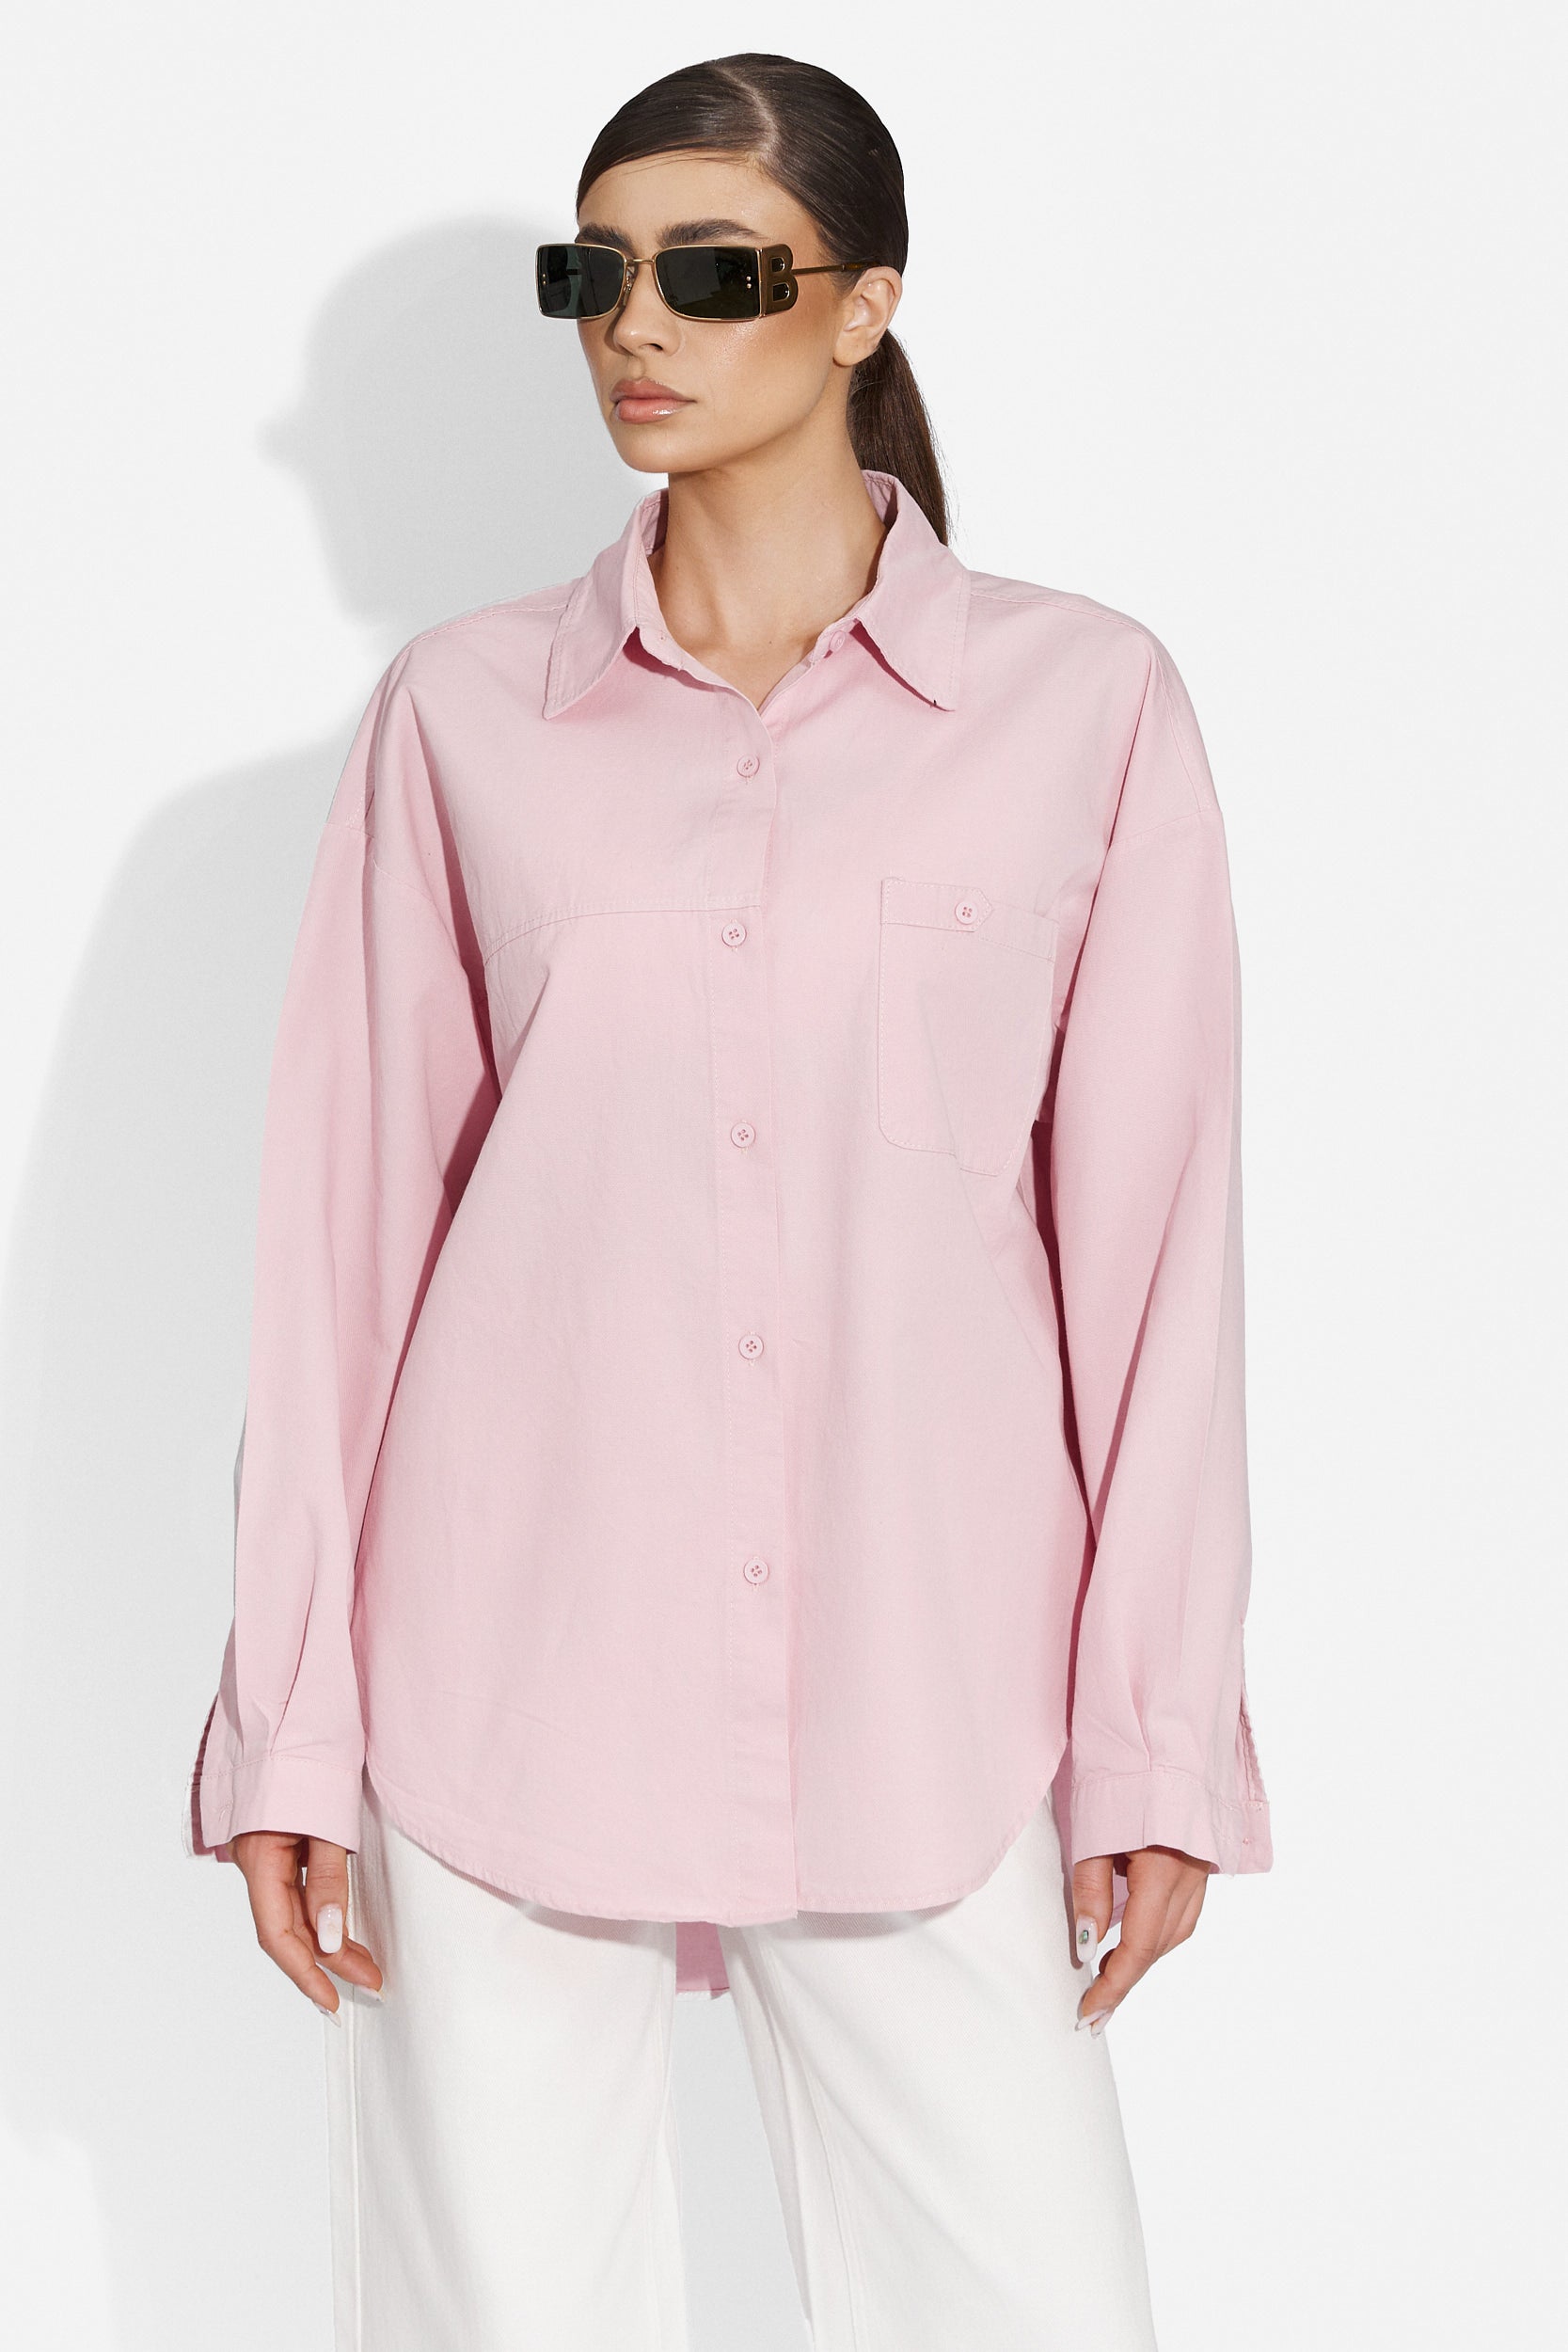 Mousa Bogas casual shirt pink